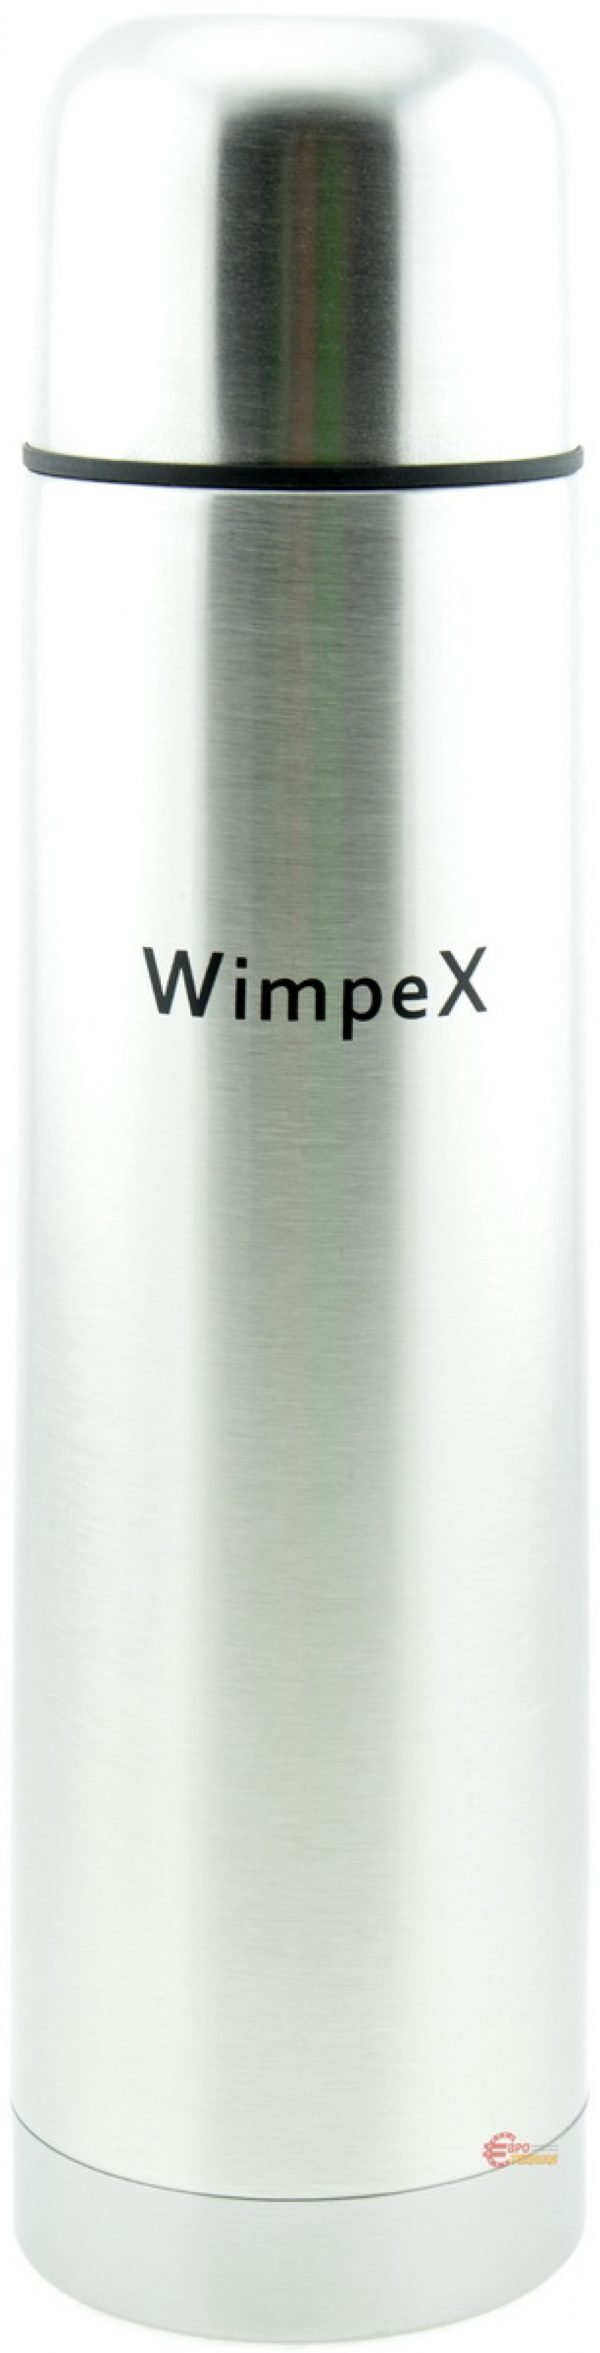 Термоc помповый Wimpex WX-75 (750мл)